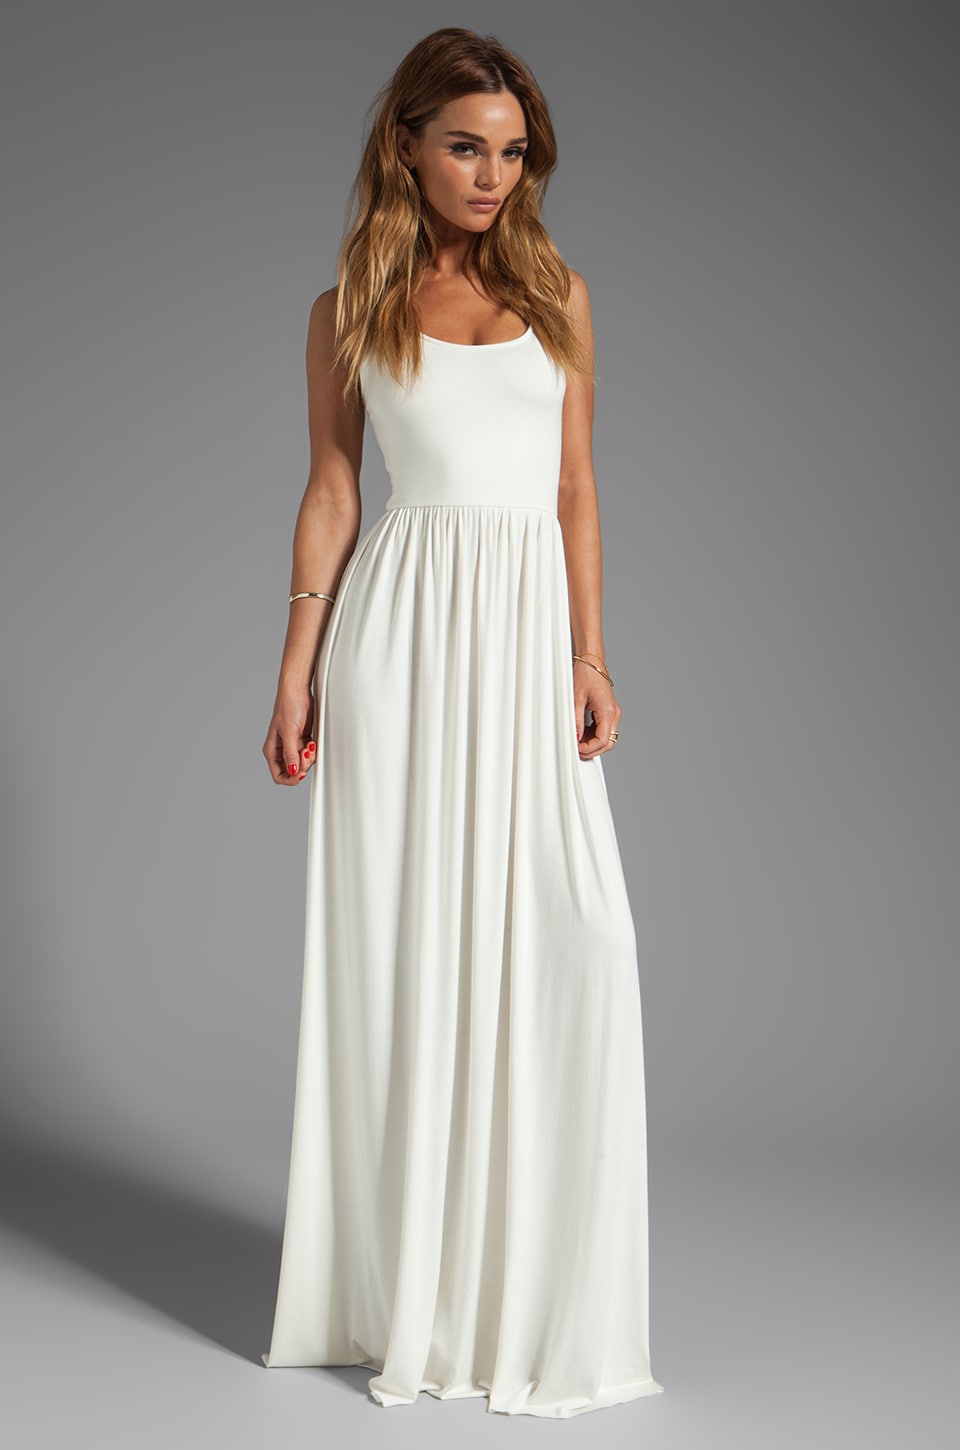 Rachel Pally Paris Dress in White | REVOLVE